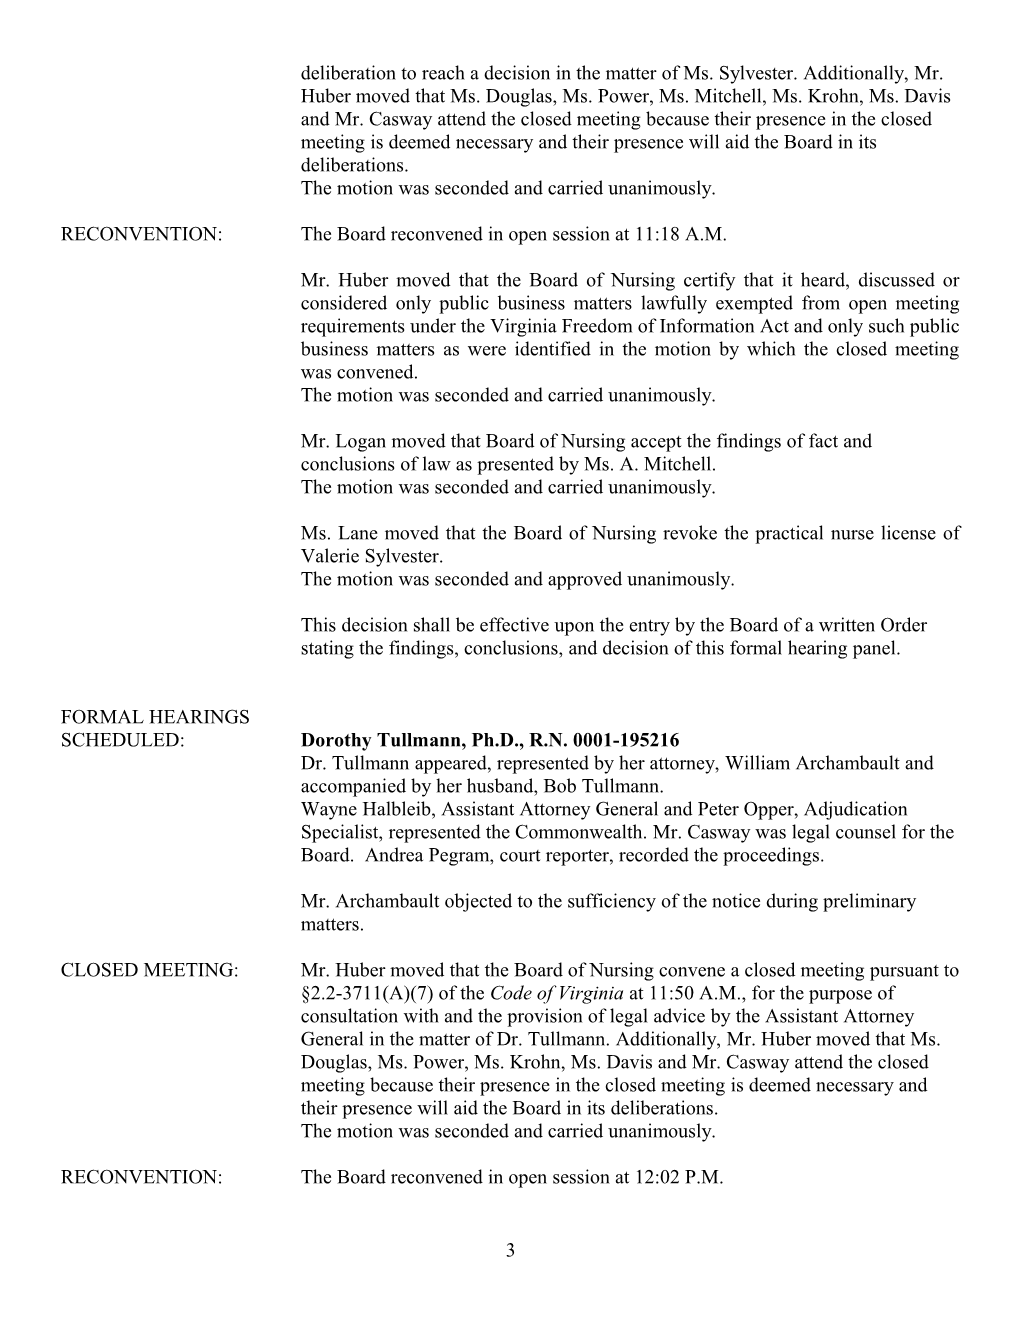 Nursing-Minutes of May 16, 2007, Formal Hearings